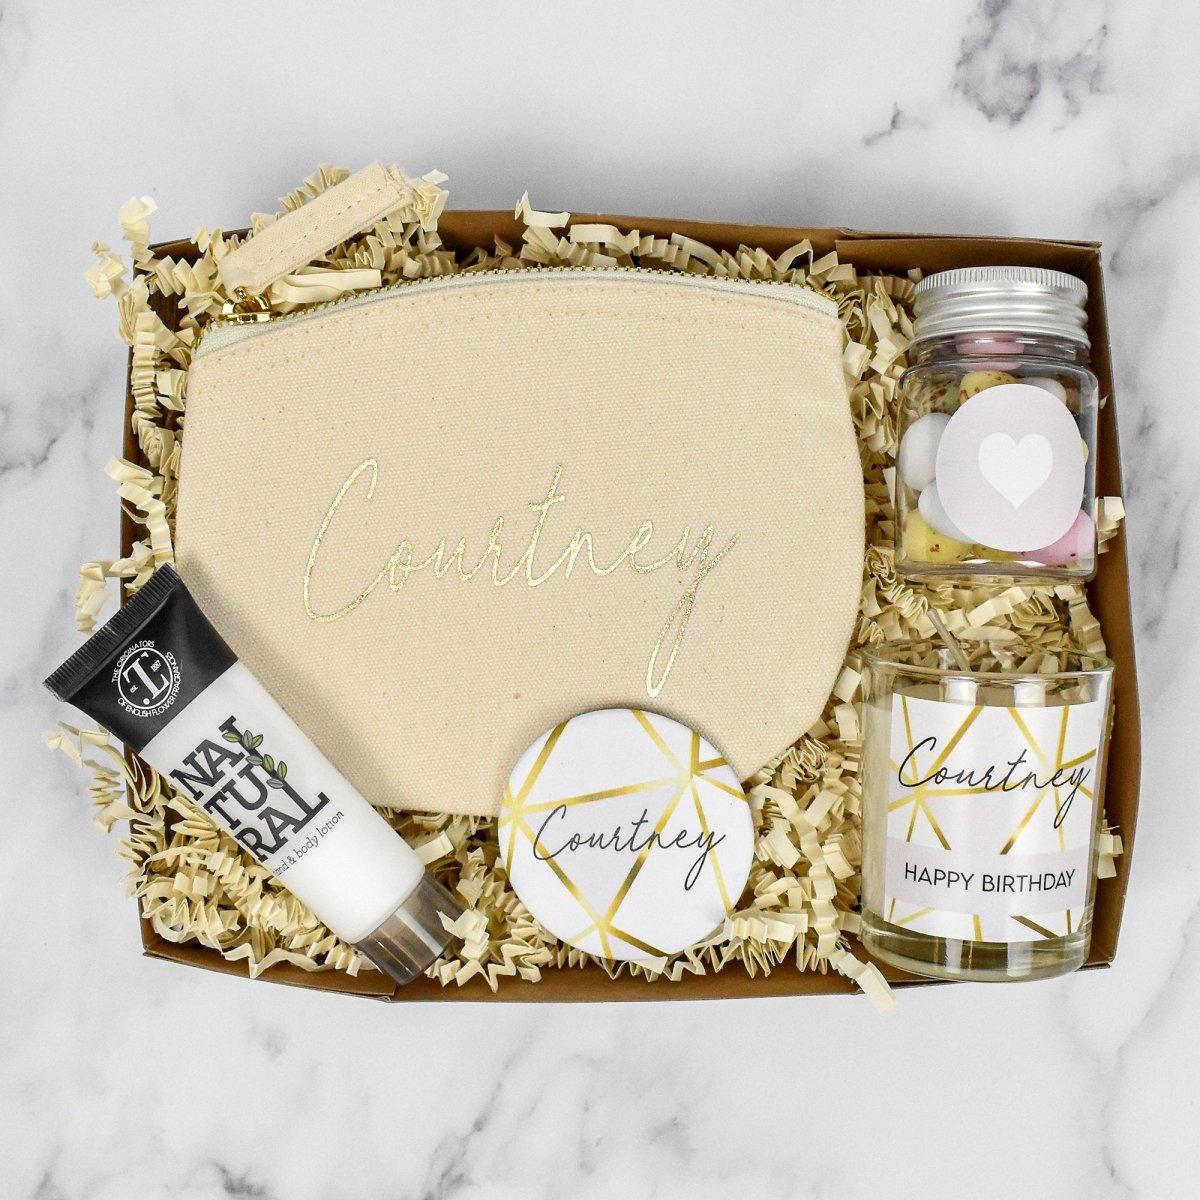 Happy Birthday Gift Box Filled, Gold Best Friend Gift Box, Beauty Filled Gift Boxes, Spa Kits Box, Happy Birthday Gift, Boxed Gifts, - Amy Lucy